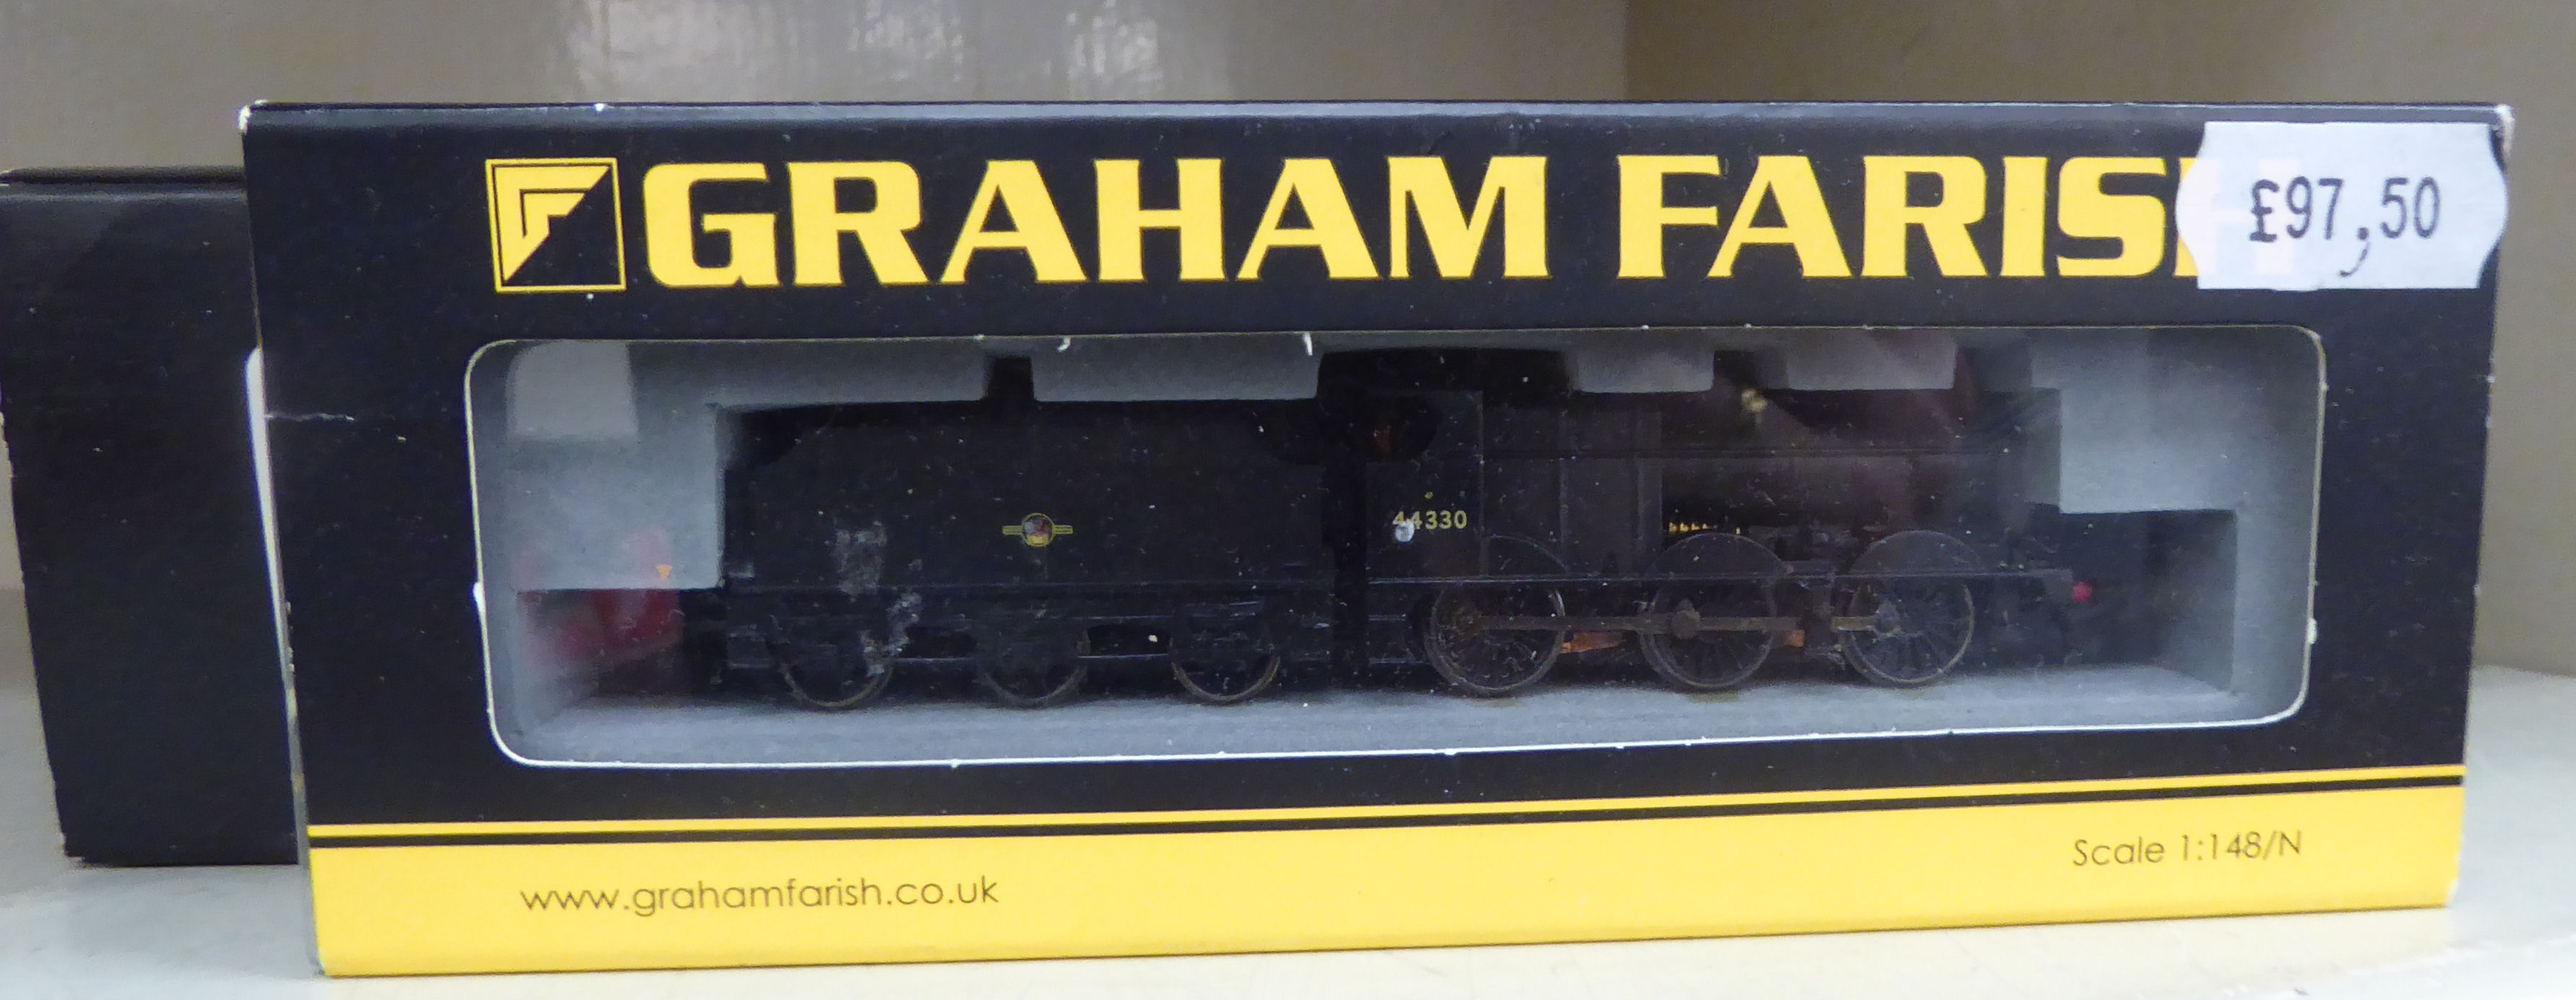 Three N gauge model railway Graham Farish locomotives and tender boxed CA - Image 4 of 5